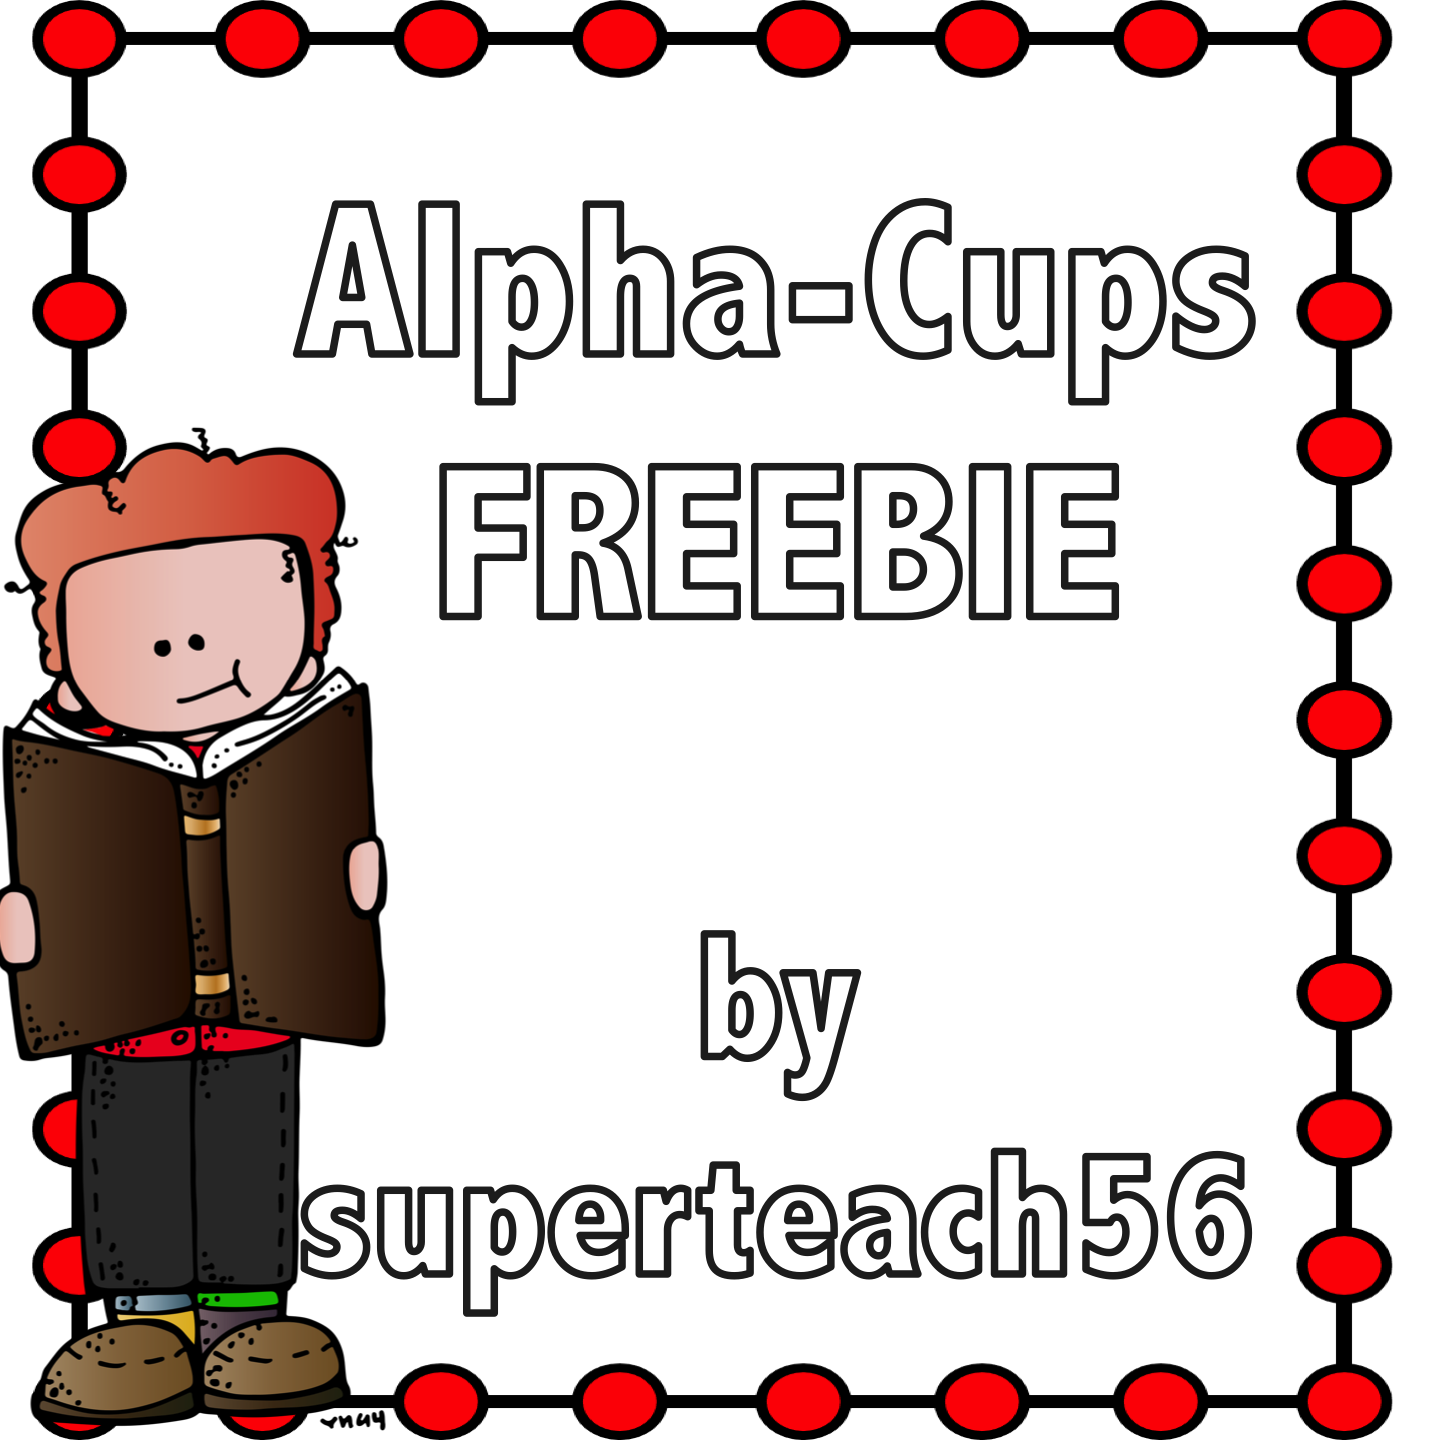 ALPHA CUP FREEBIES